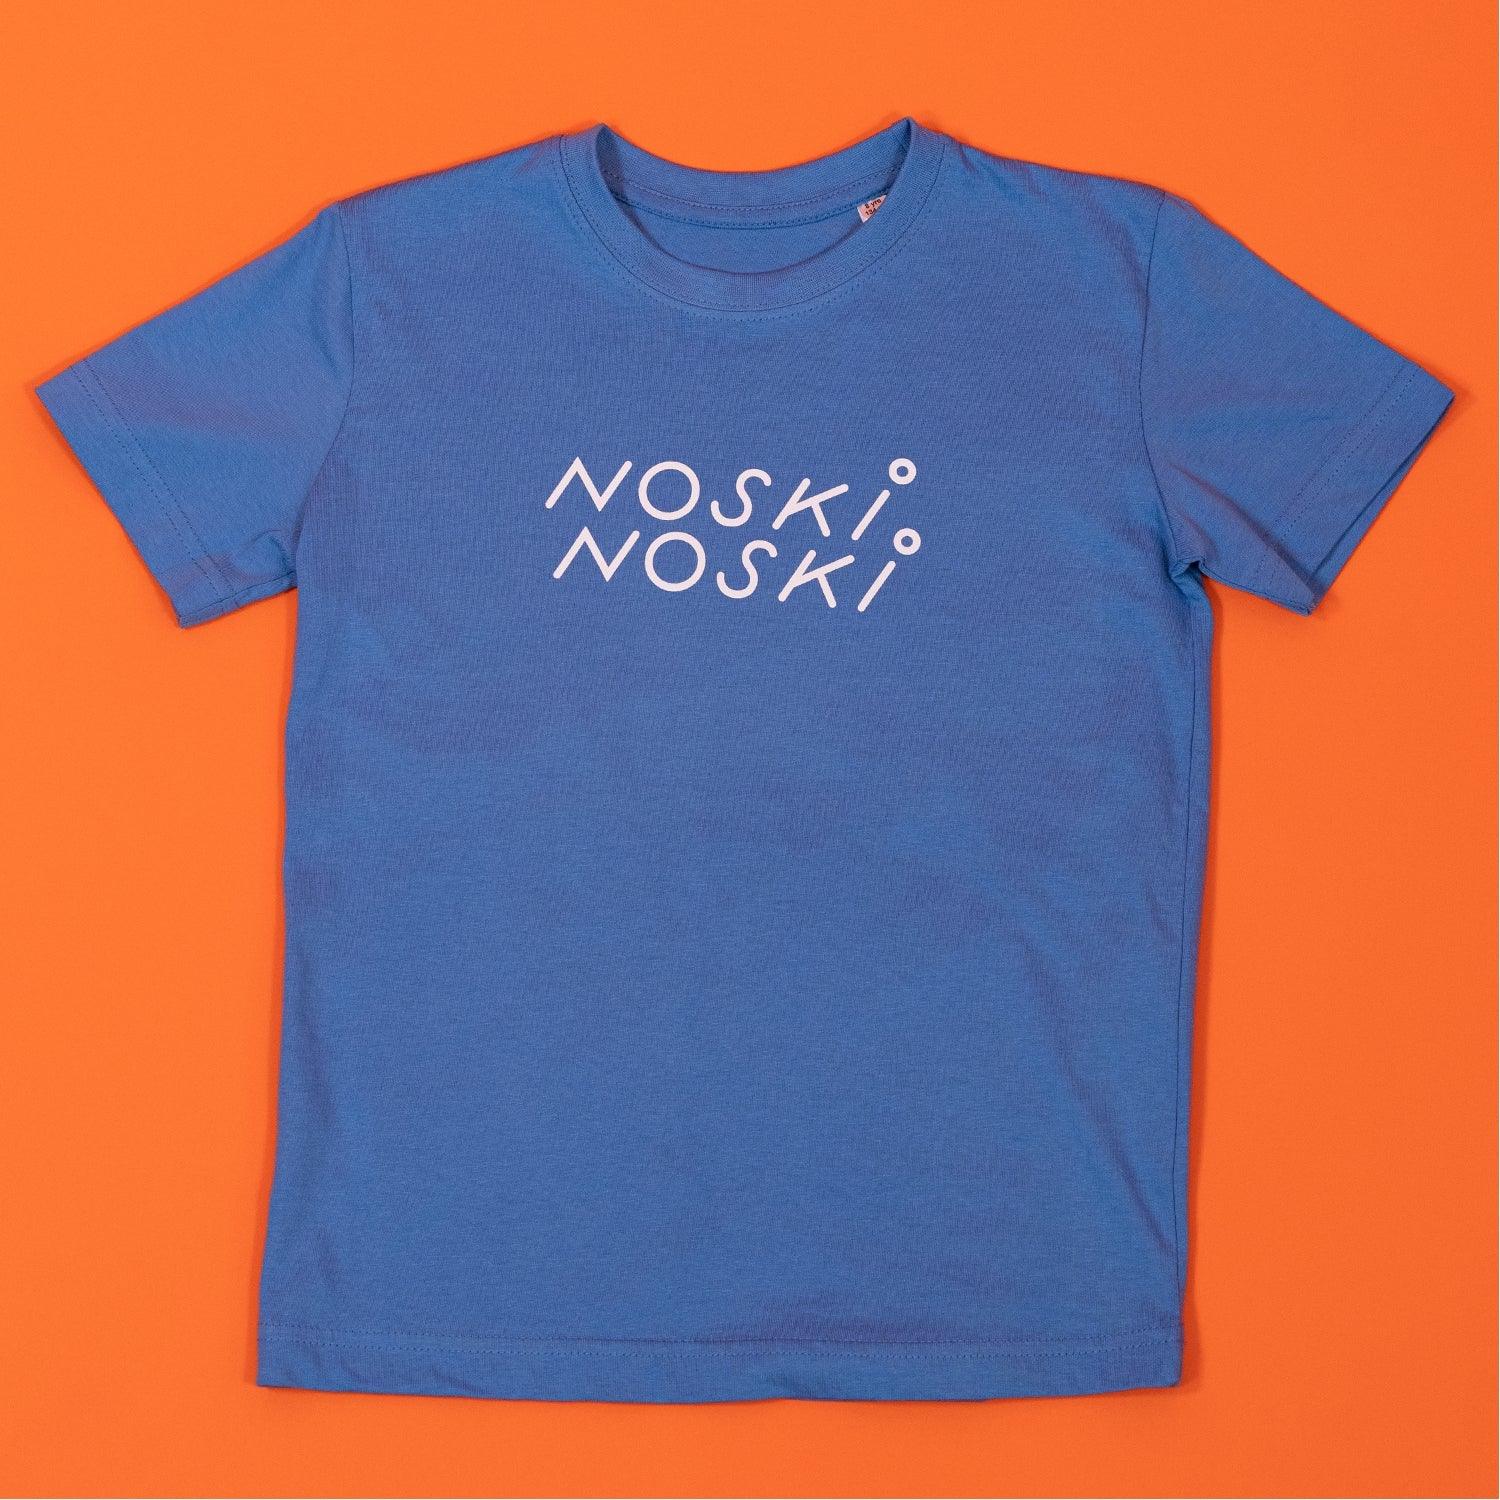 Noski noski: nn camisa de bebé